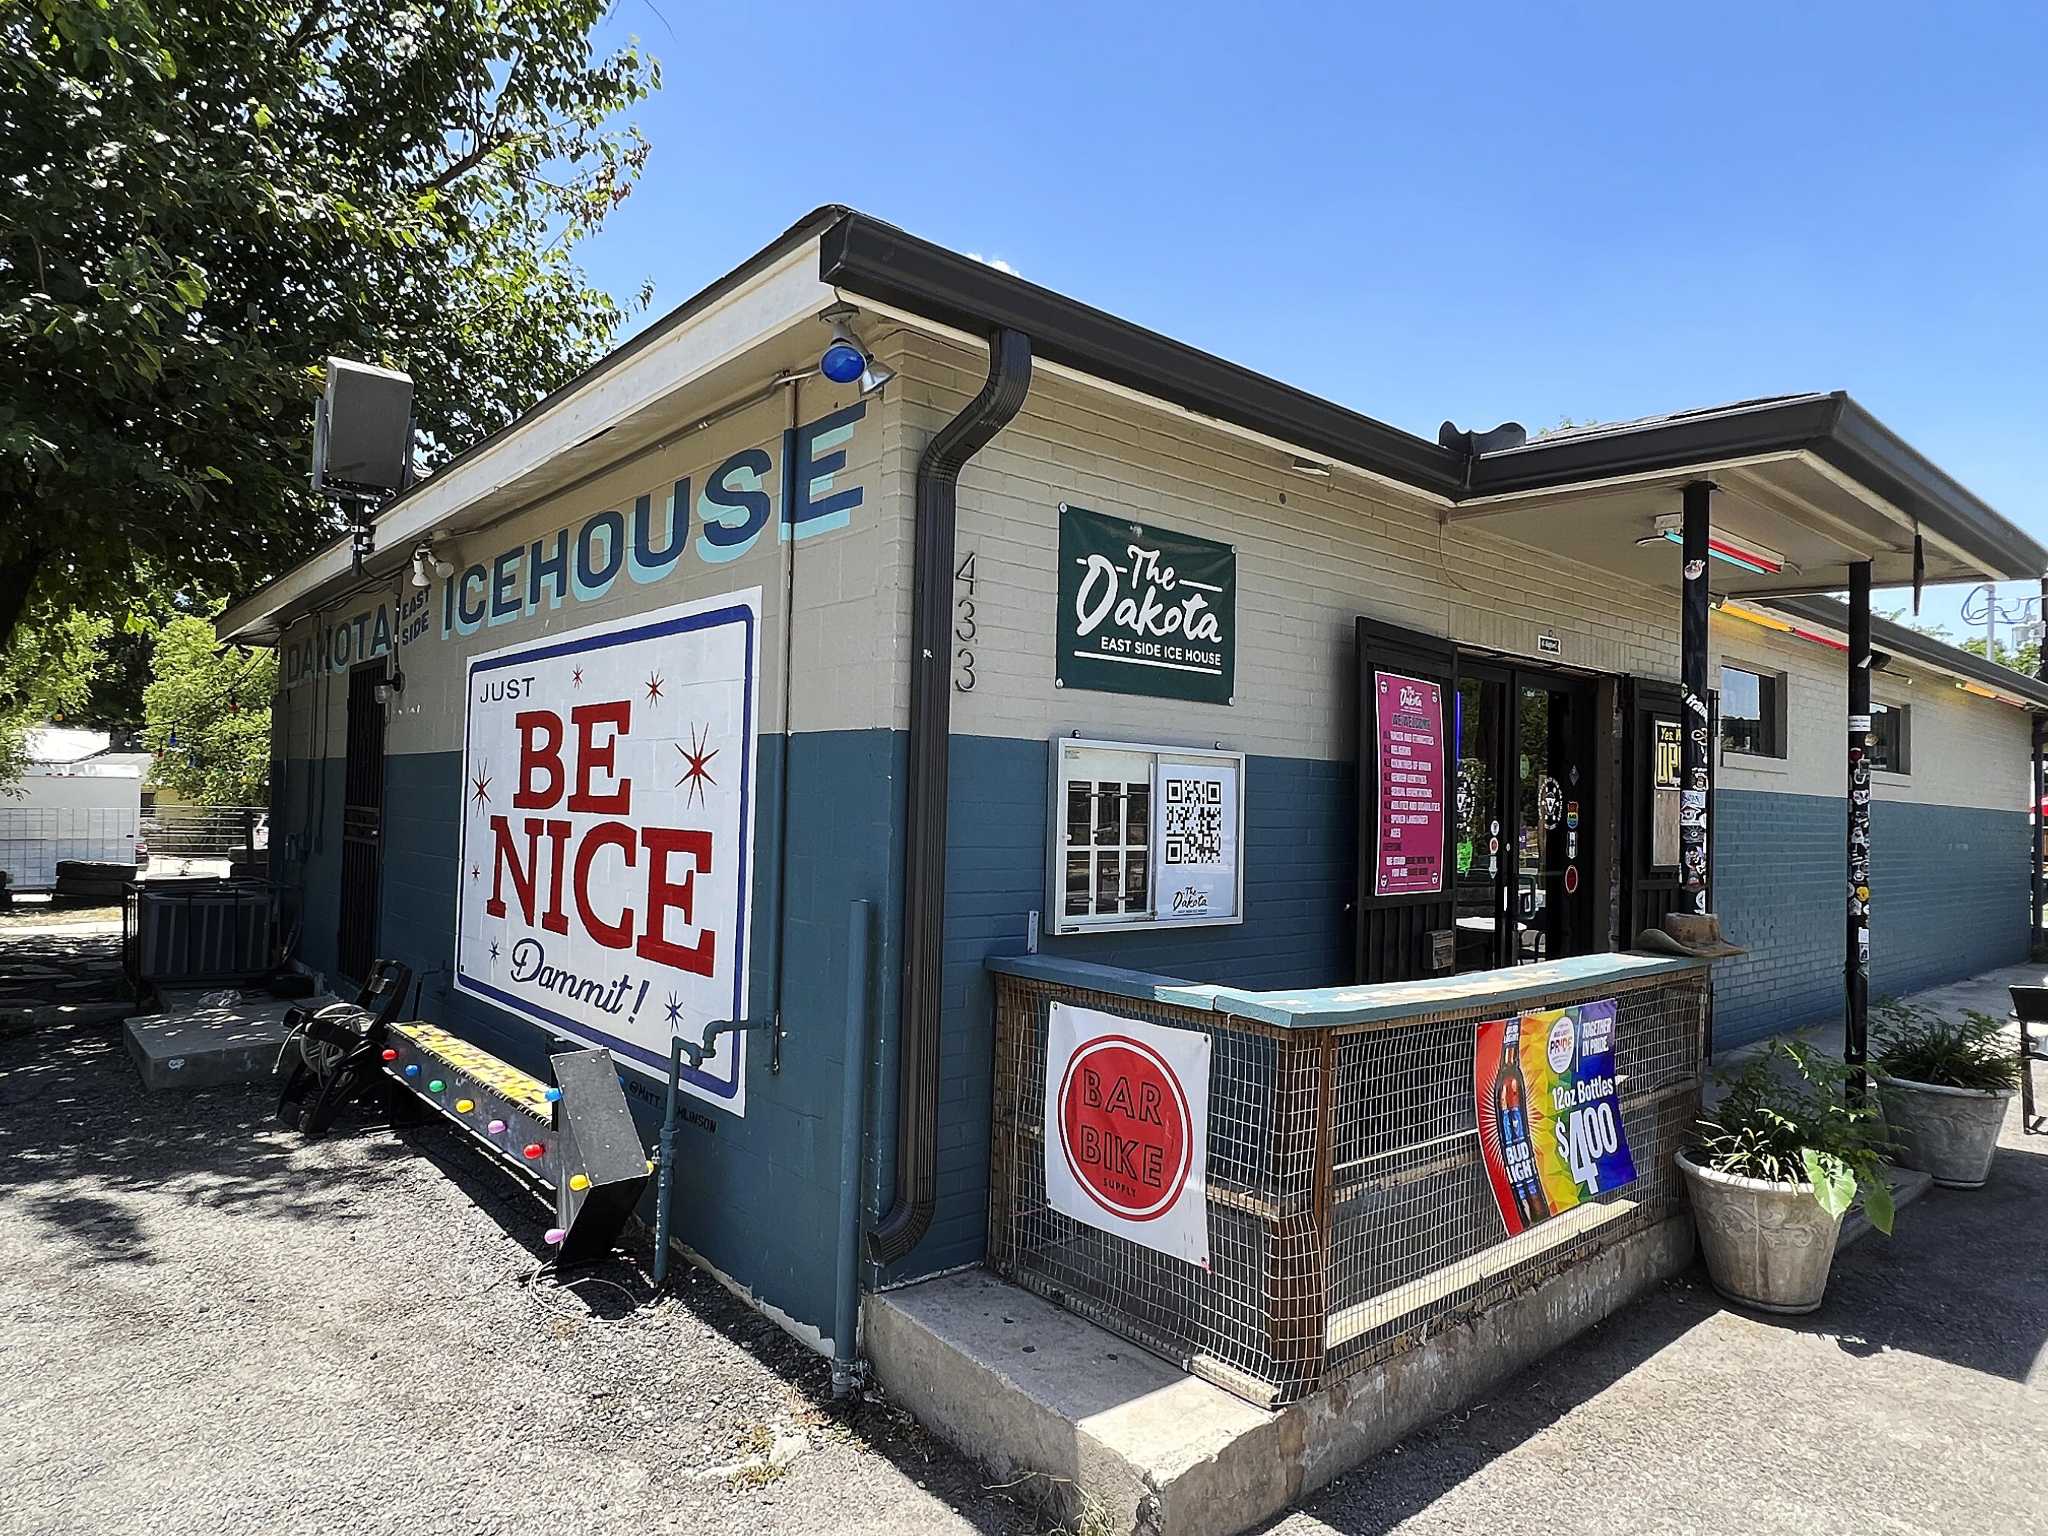 5 places for great hot dogs in San Antonio: RockerDogz, Bandit BBQ